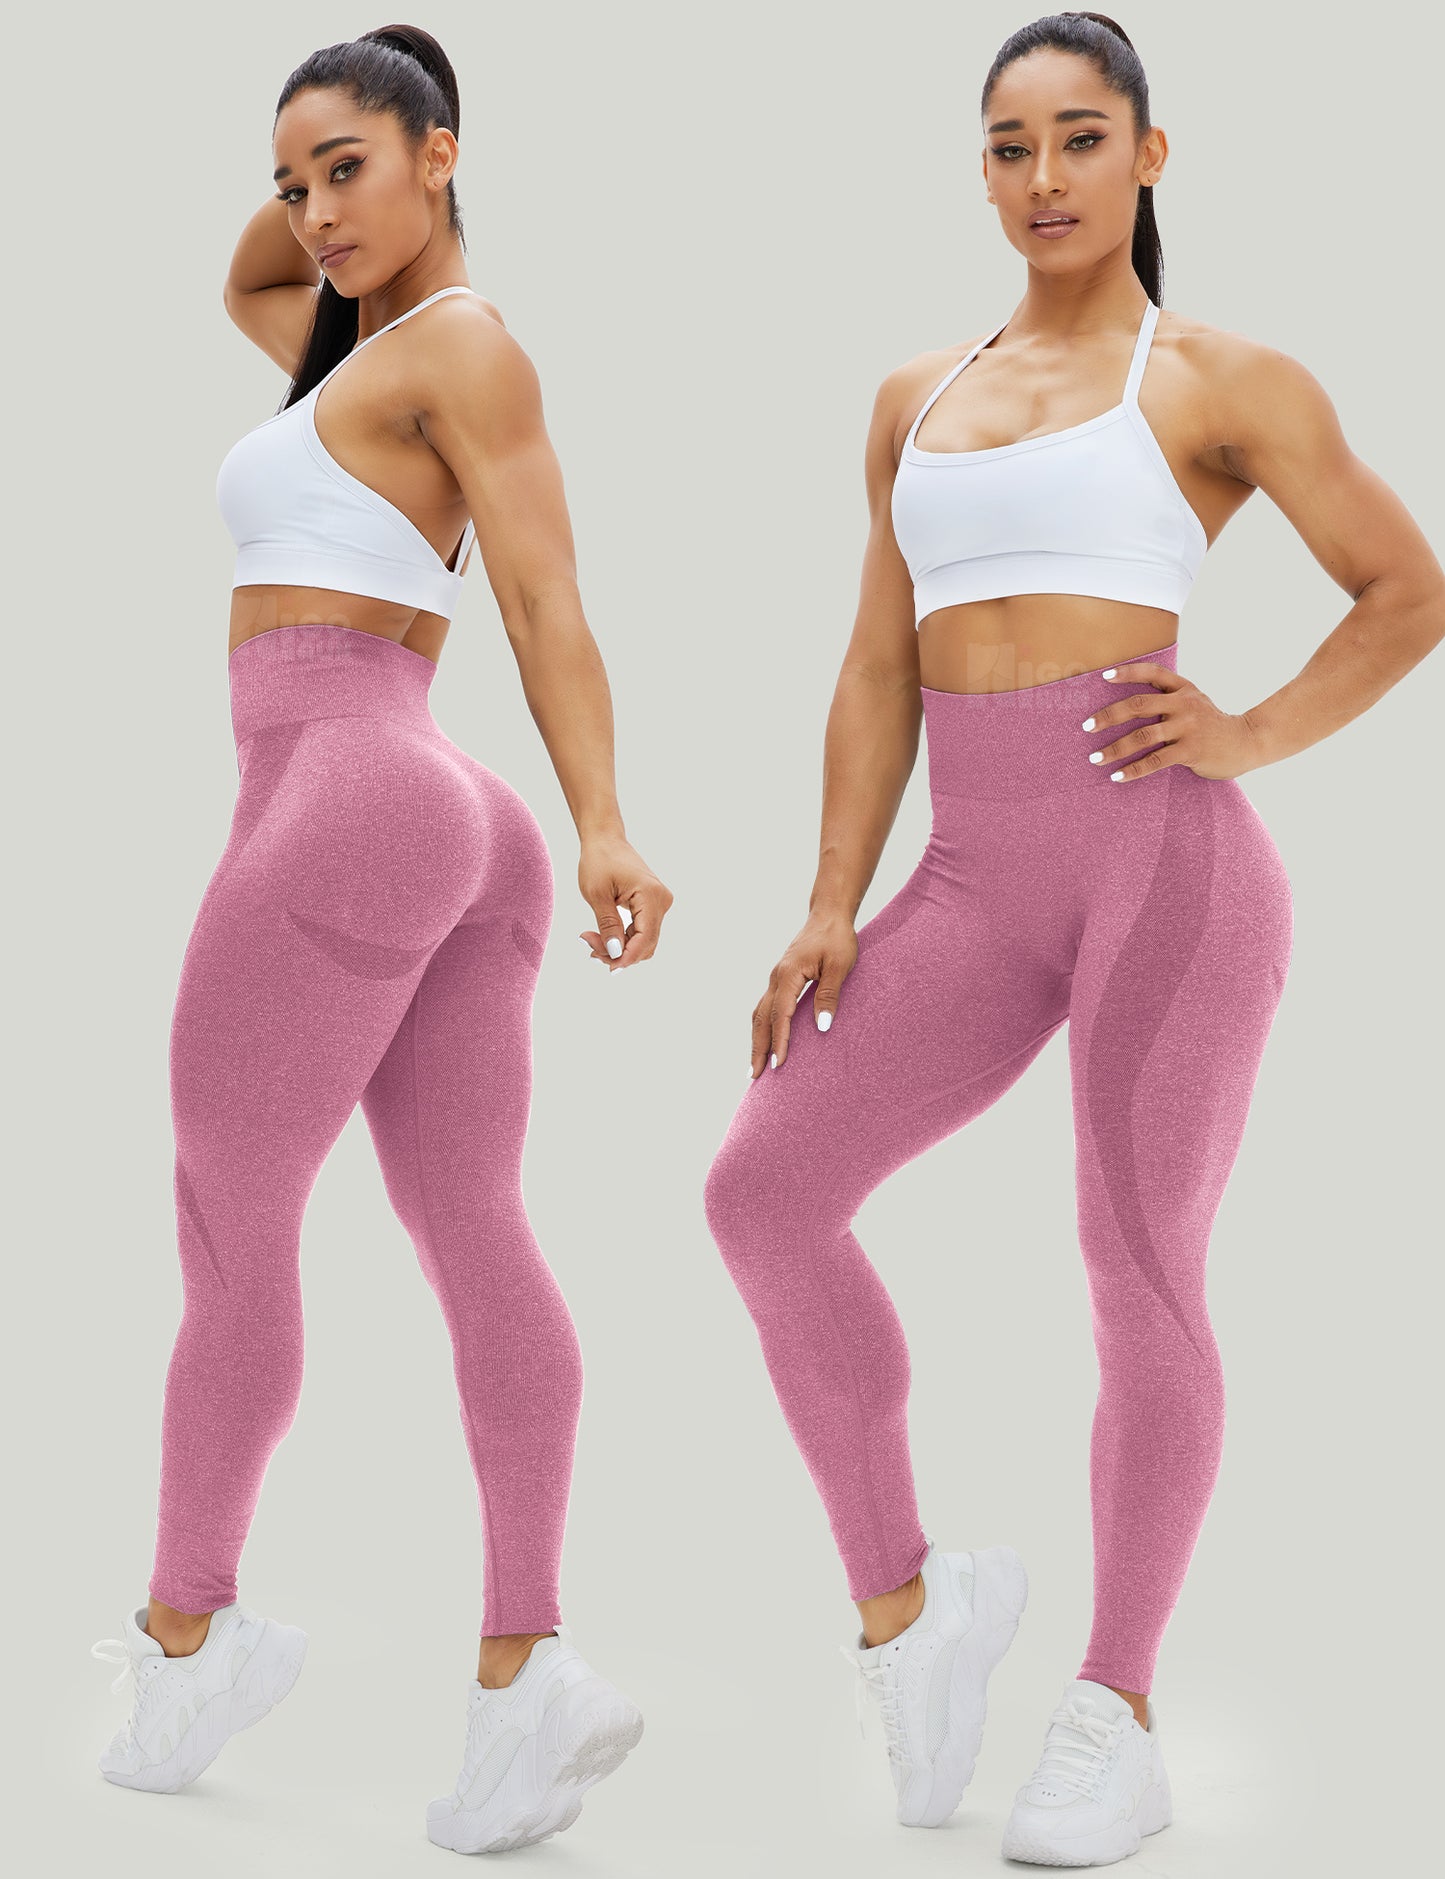 HIGORUN Women Seamless Leggings Smile Contour High Waist Workout Gym Yoga Pants pink